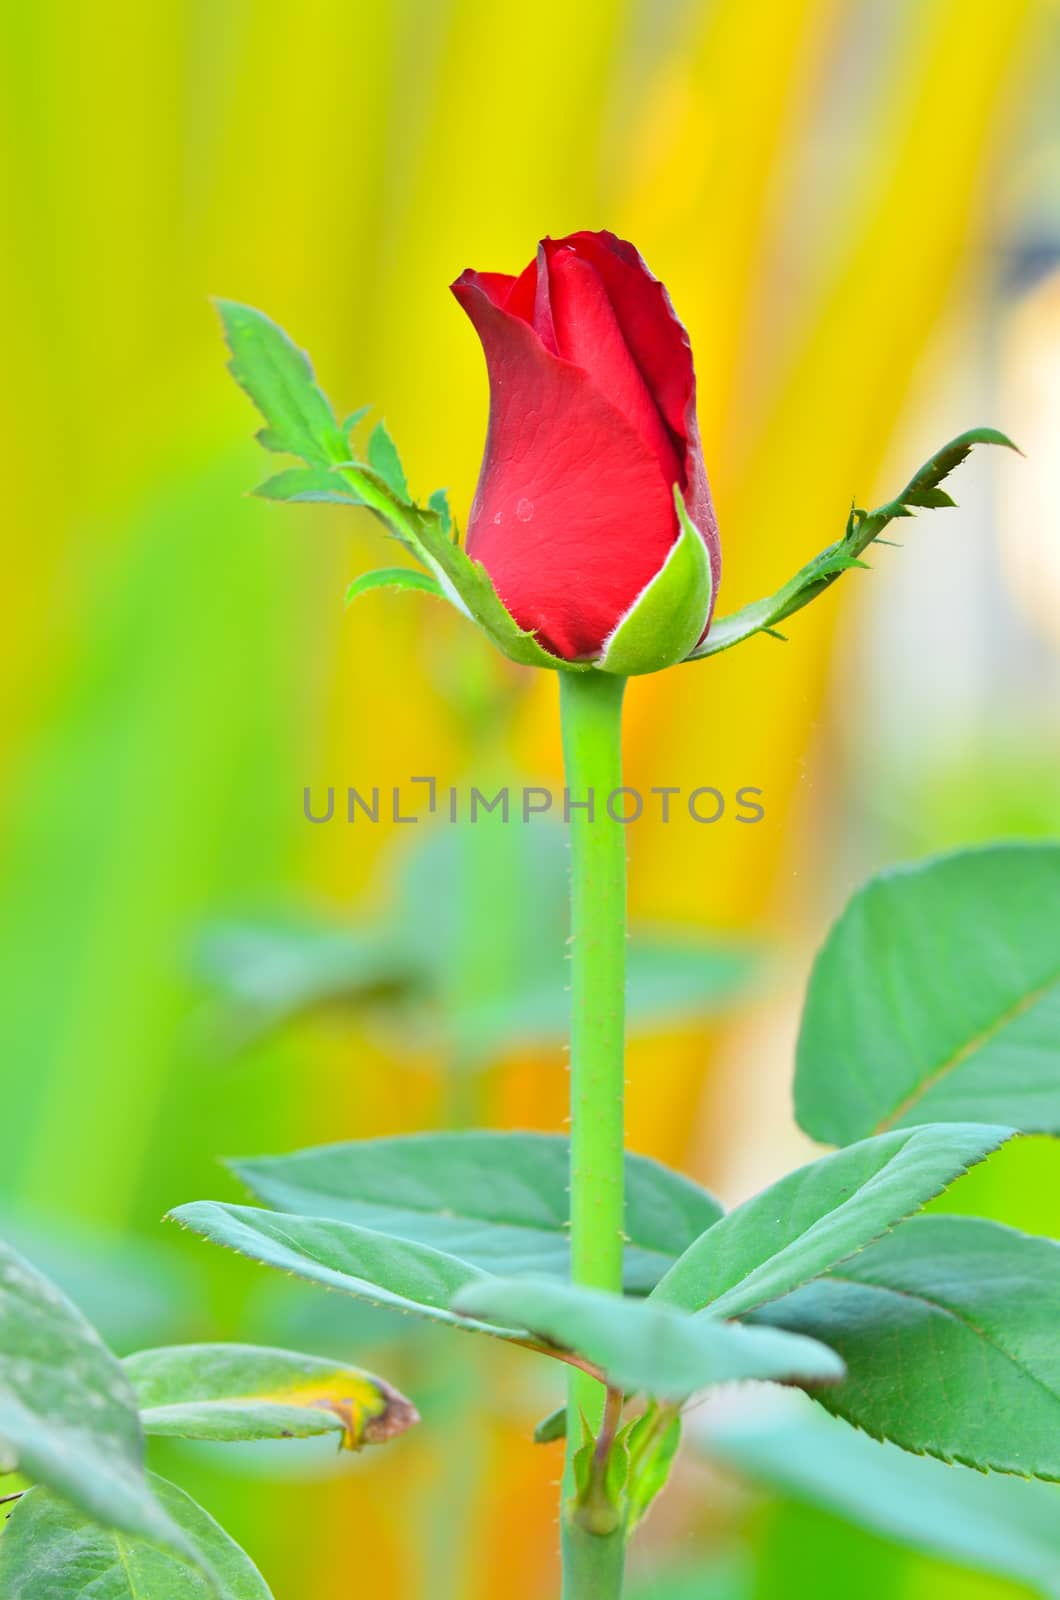 red rose' bud